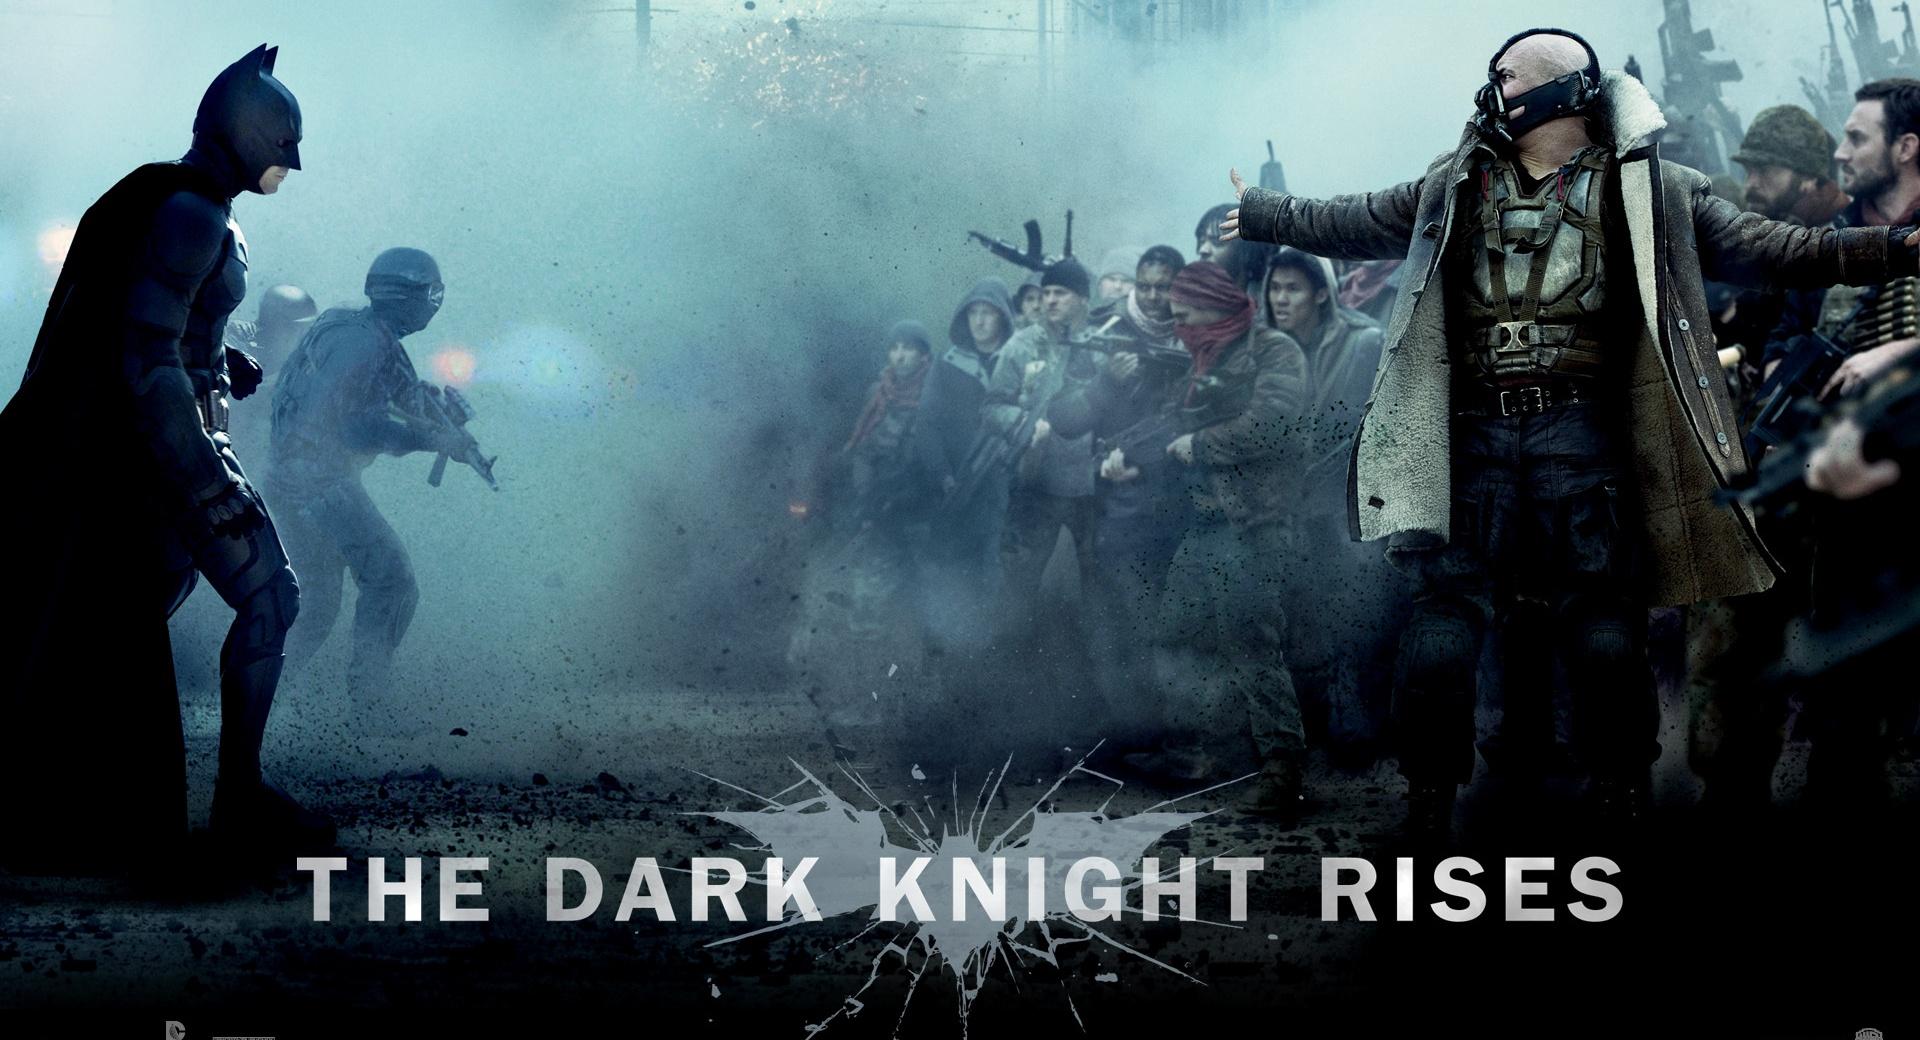 The Dark Knight Rises Bane Vs Batman at 1024 x 1024 iPad size wallpapers HD quality